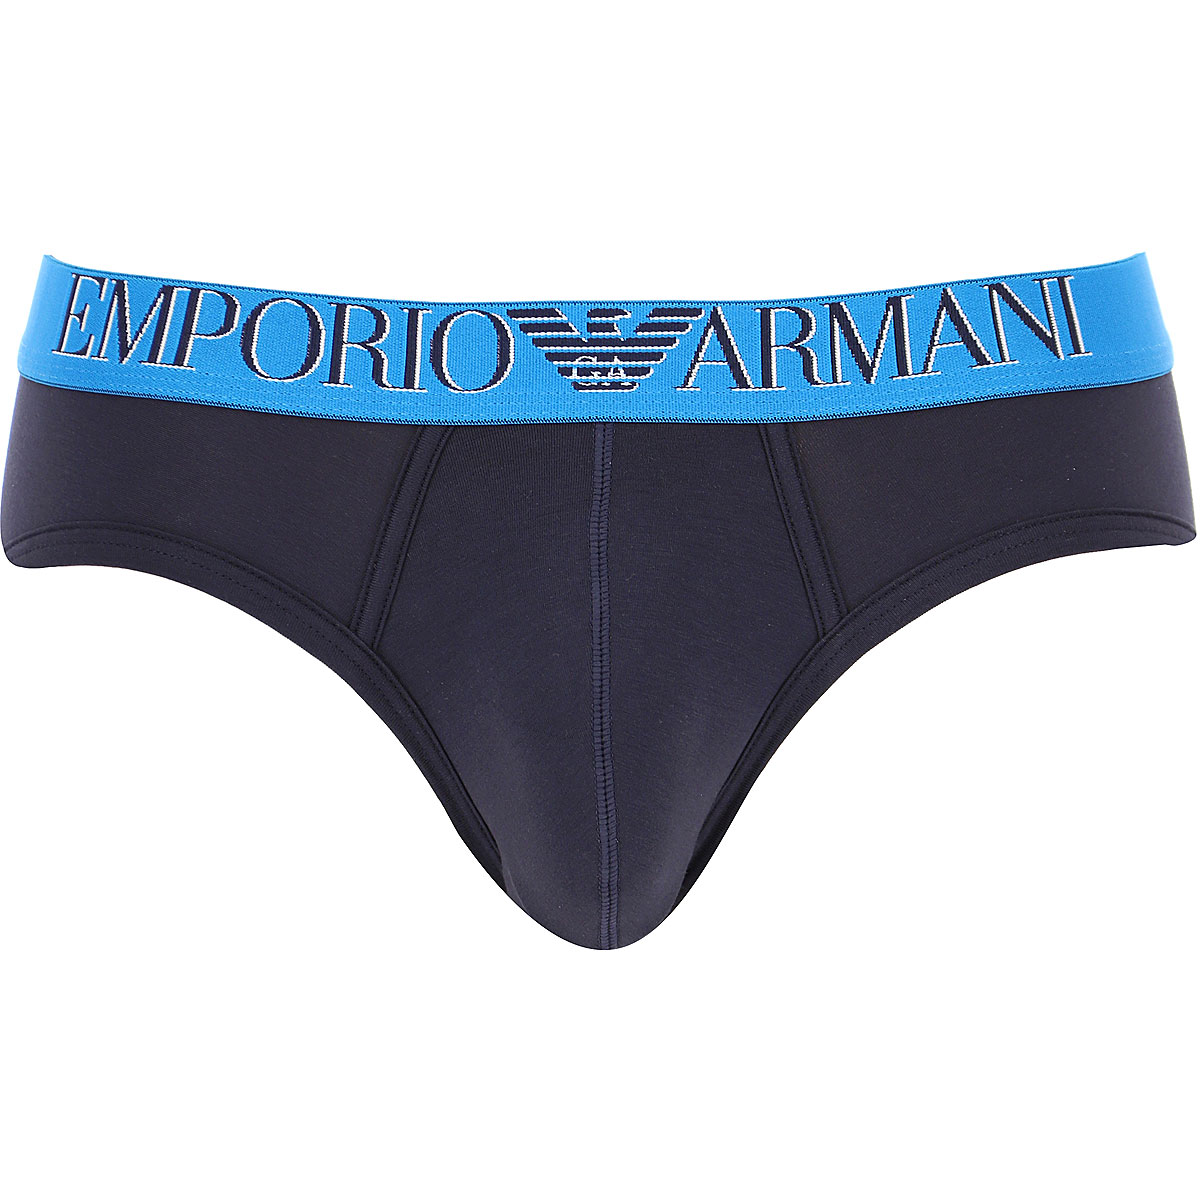 Mens Underwear Emporio Armani, Style code: 111617-0p525-00135